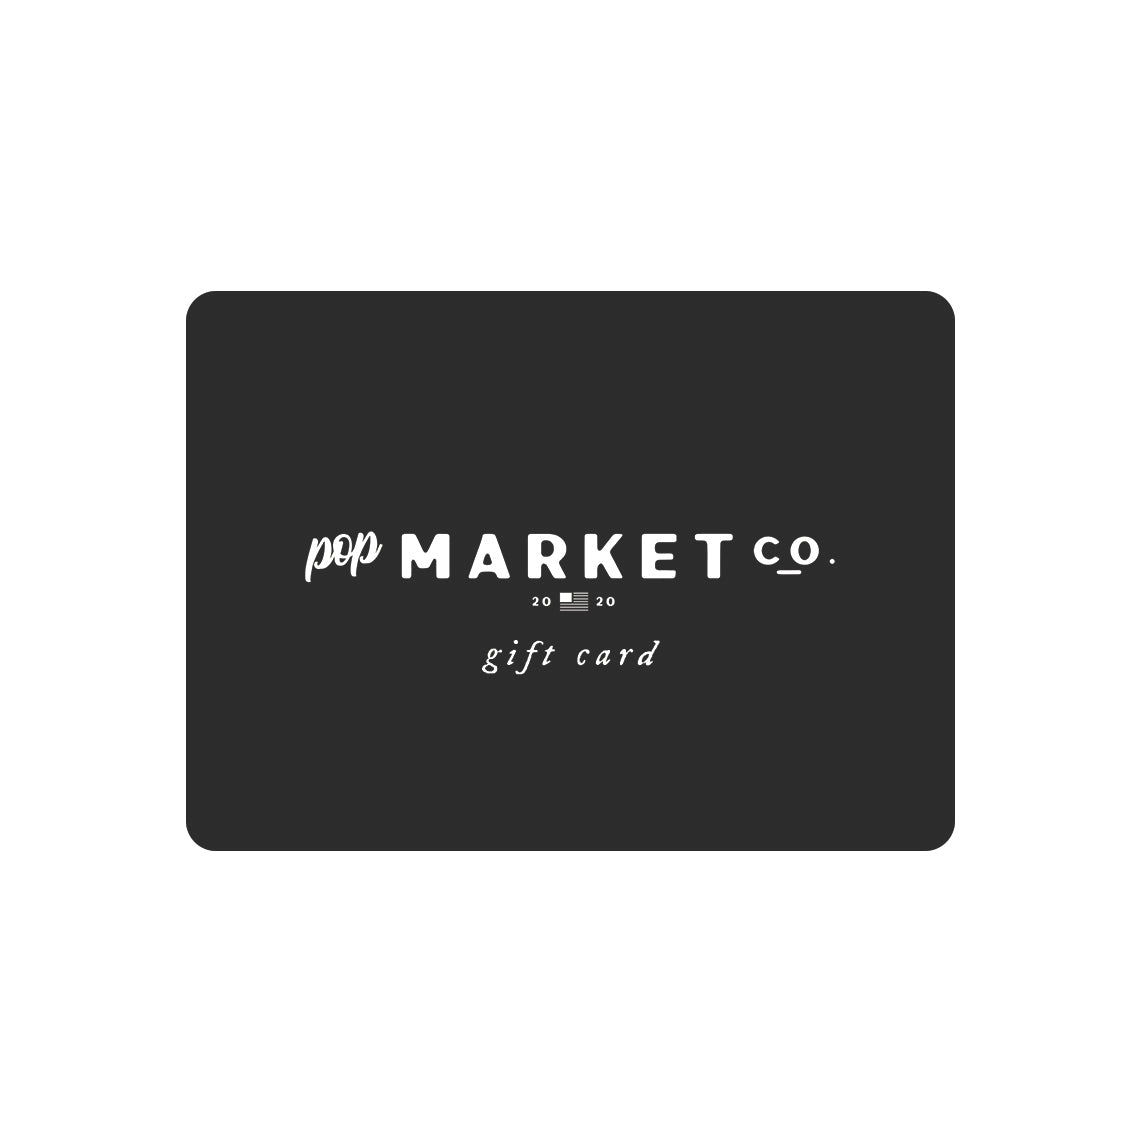 PoP Market Co. gift card